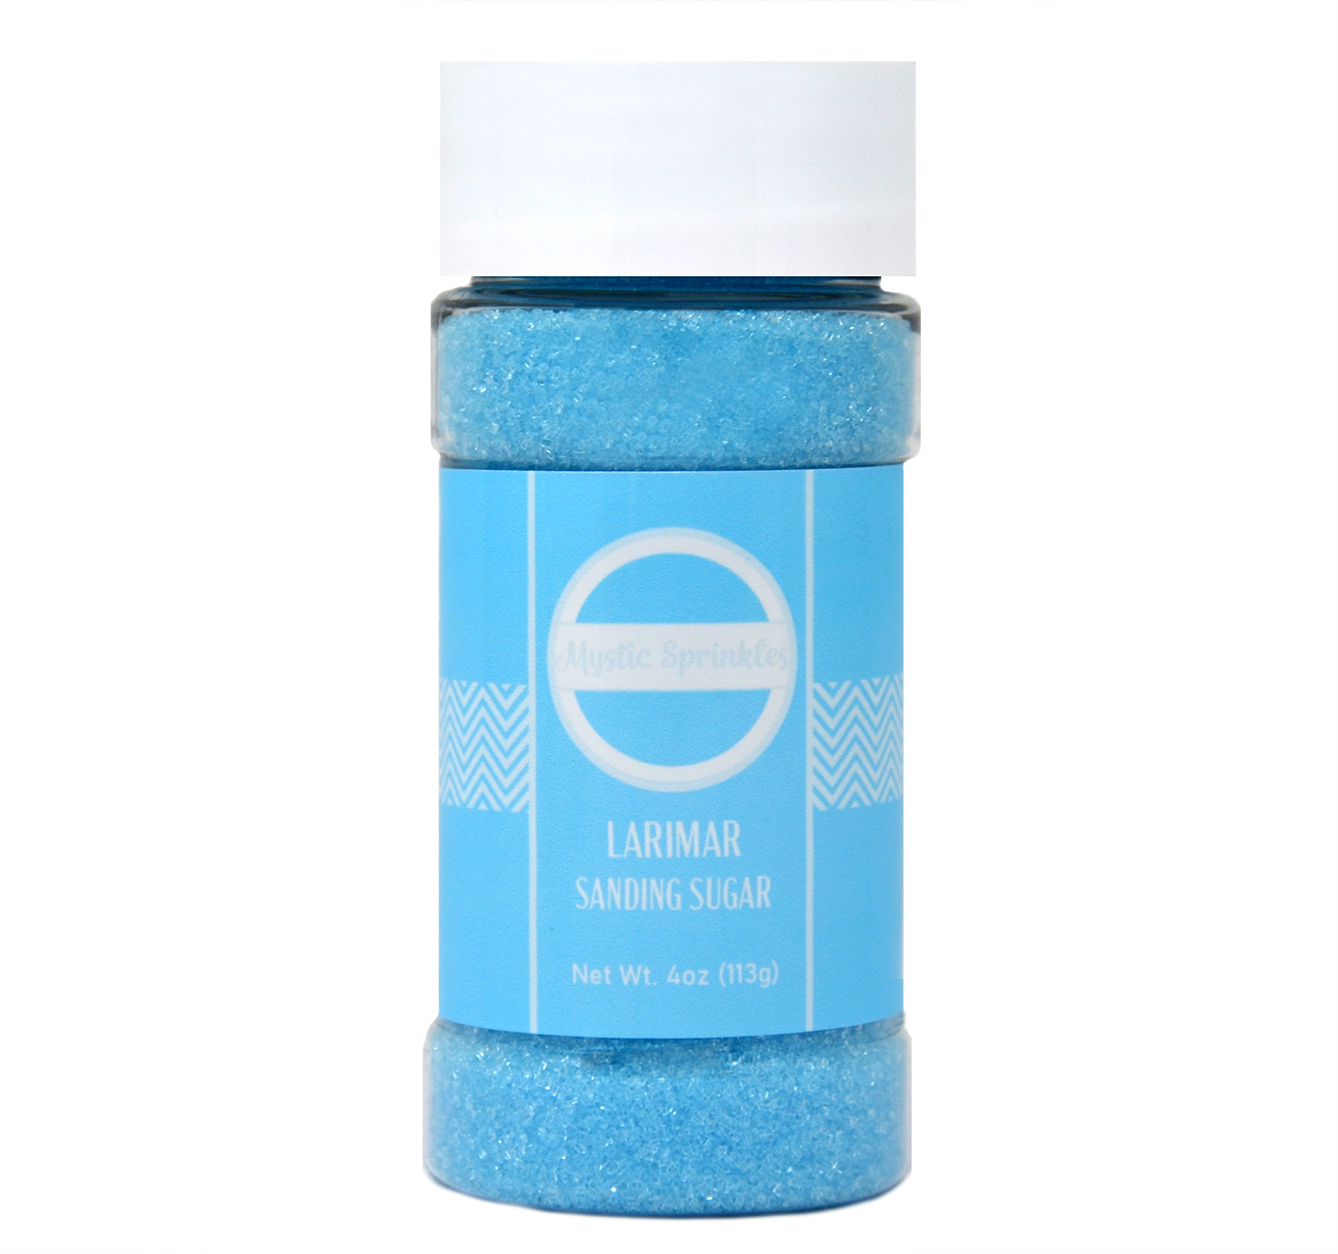 Larimar - Sky Blue Sanding Sugar 4oz